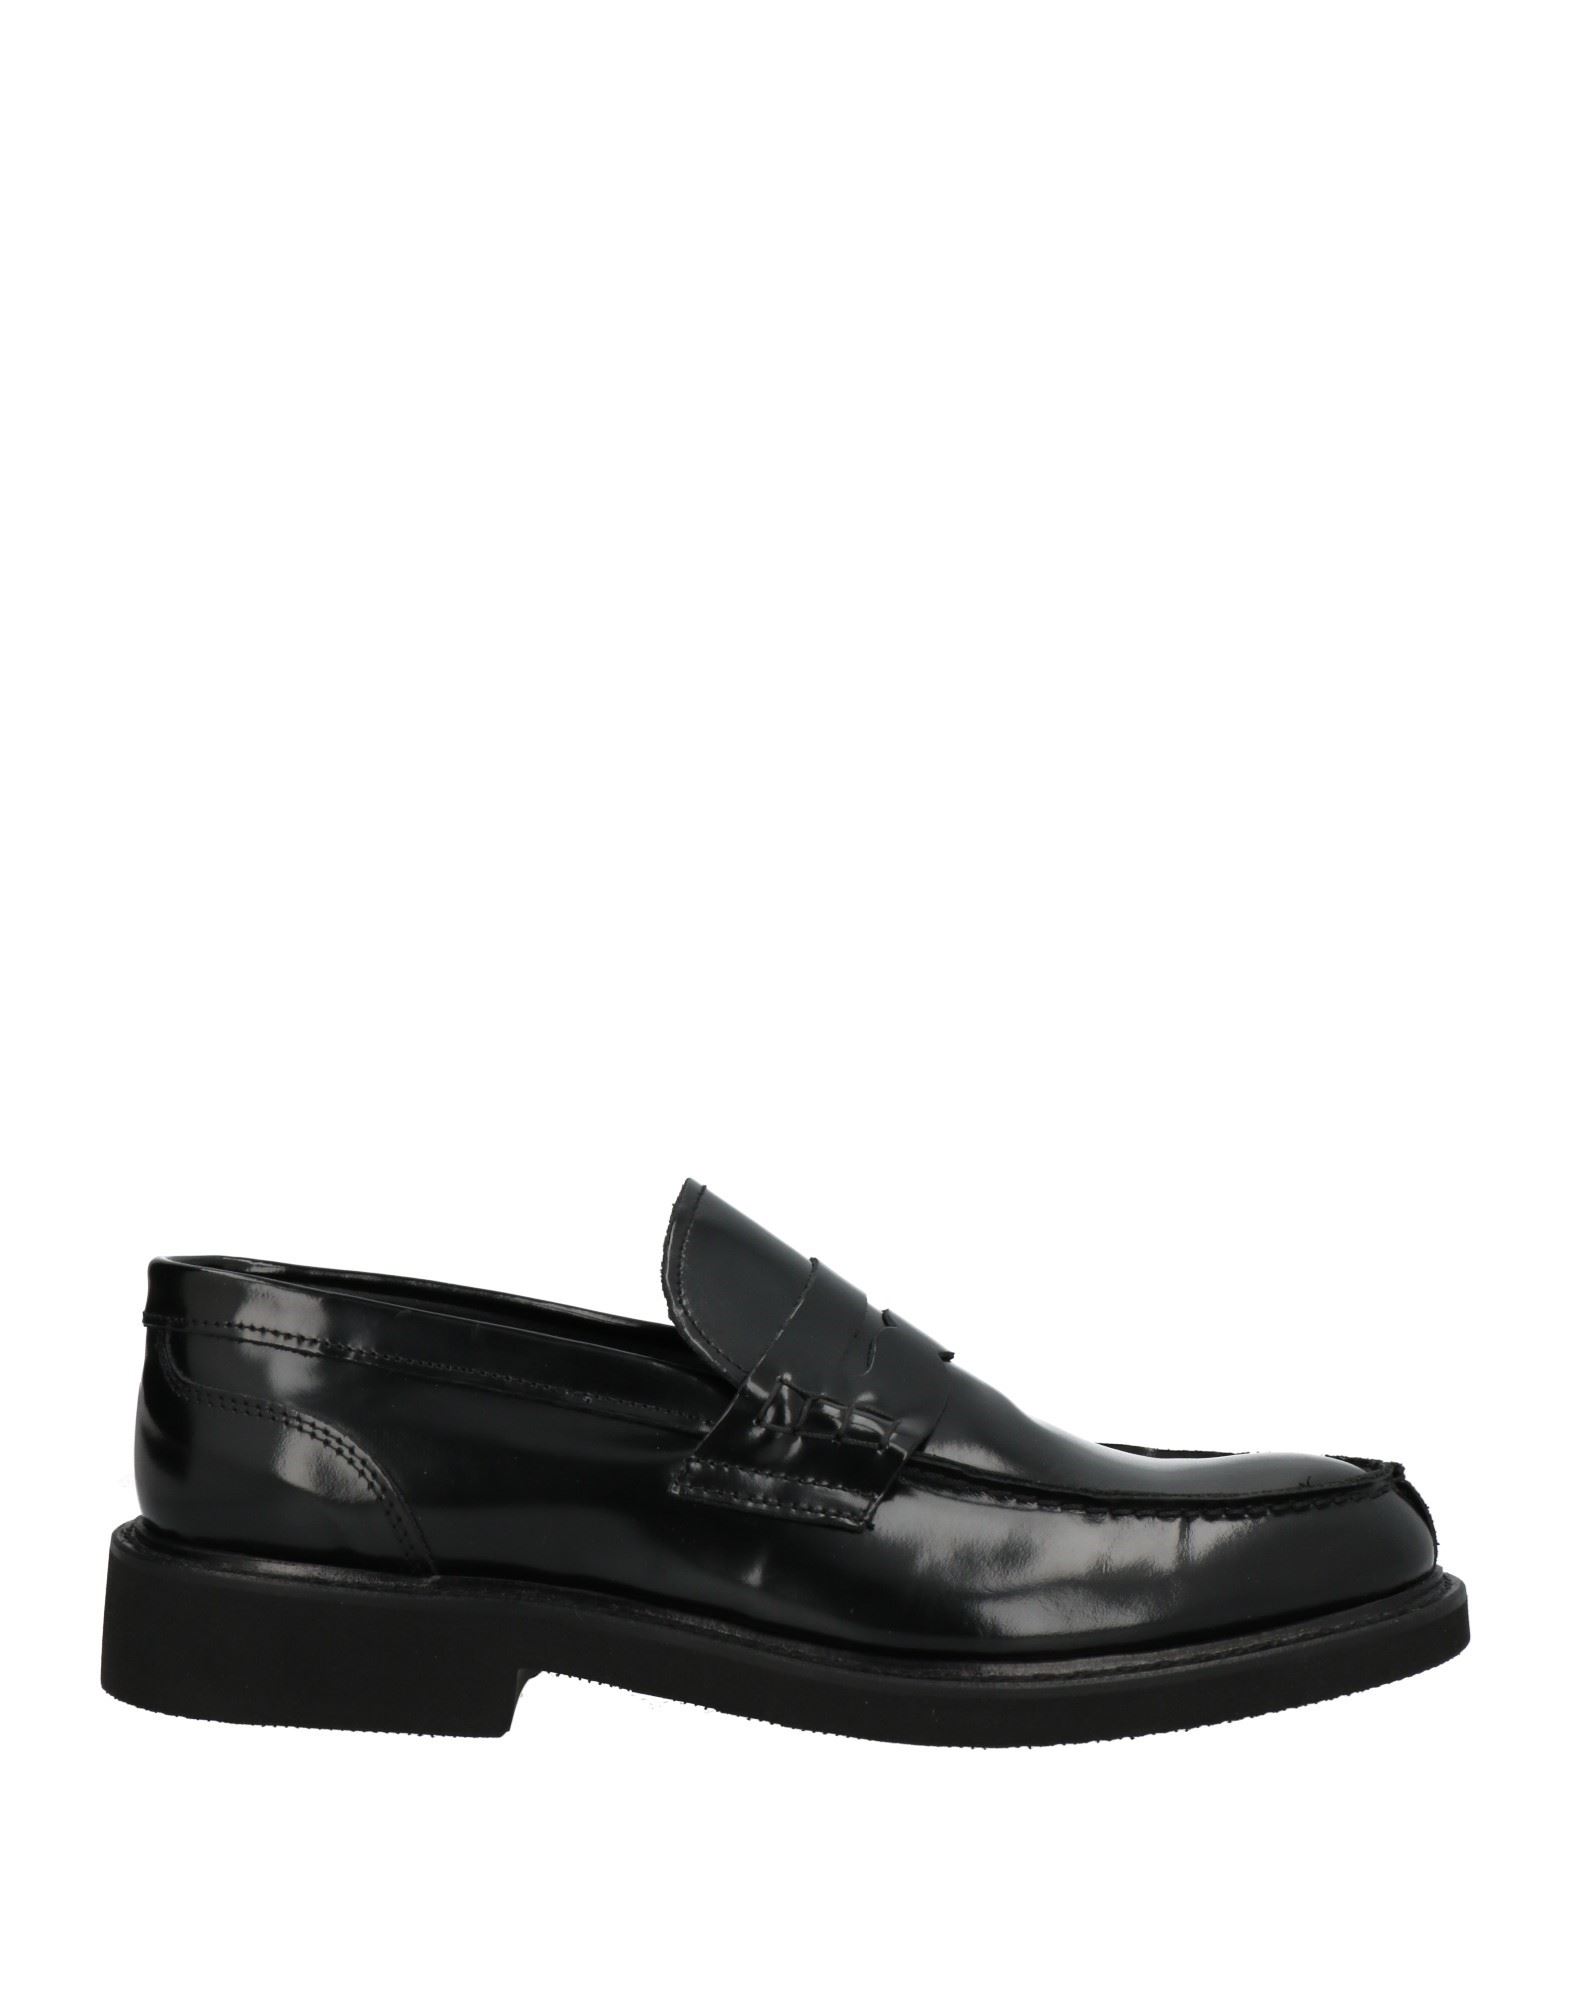 Shop Brawn's Man Loafers Black Size 7 Soft Leather